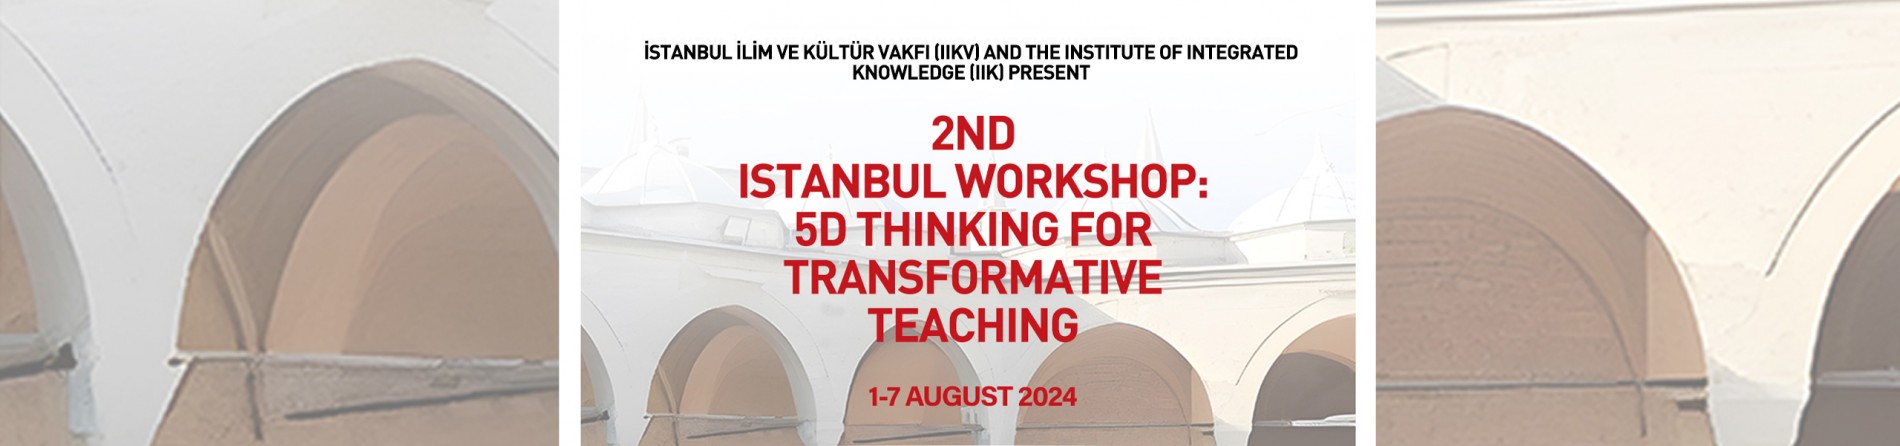 2ND Istanbul Workshop